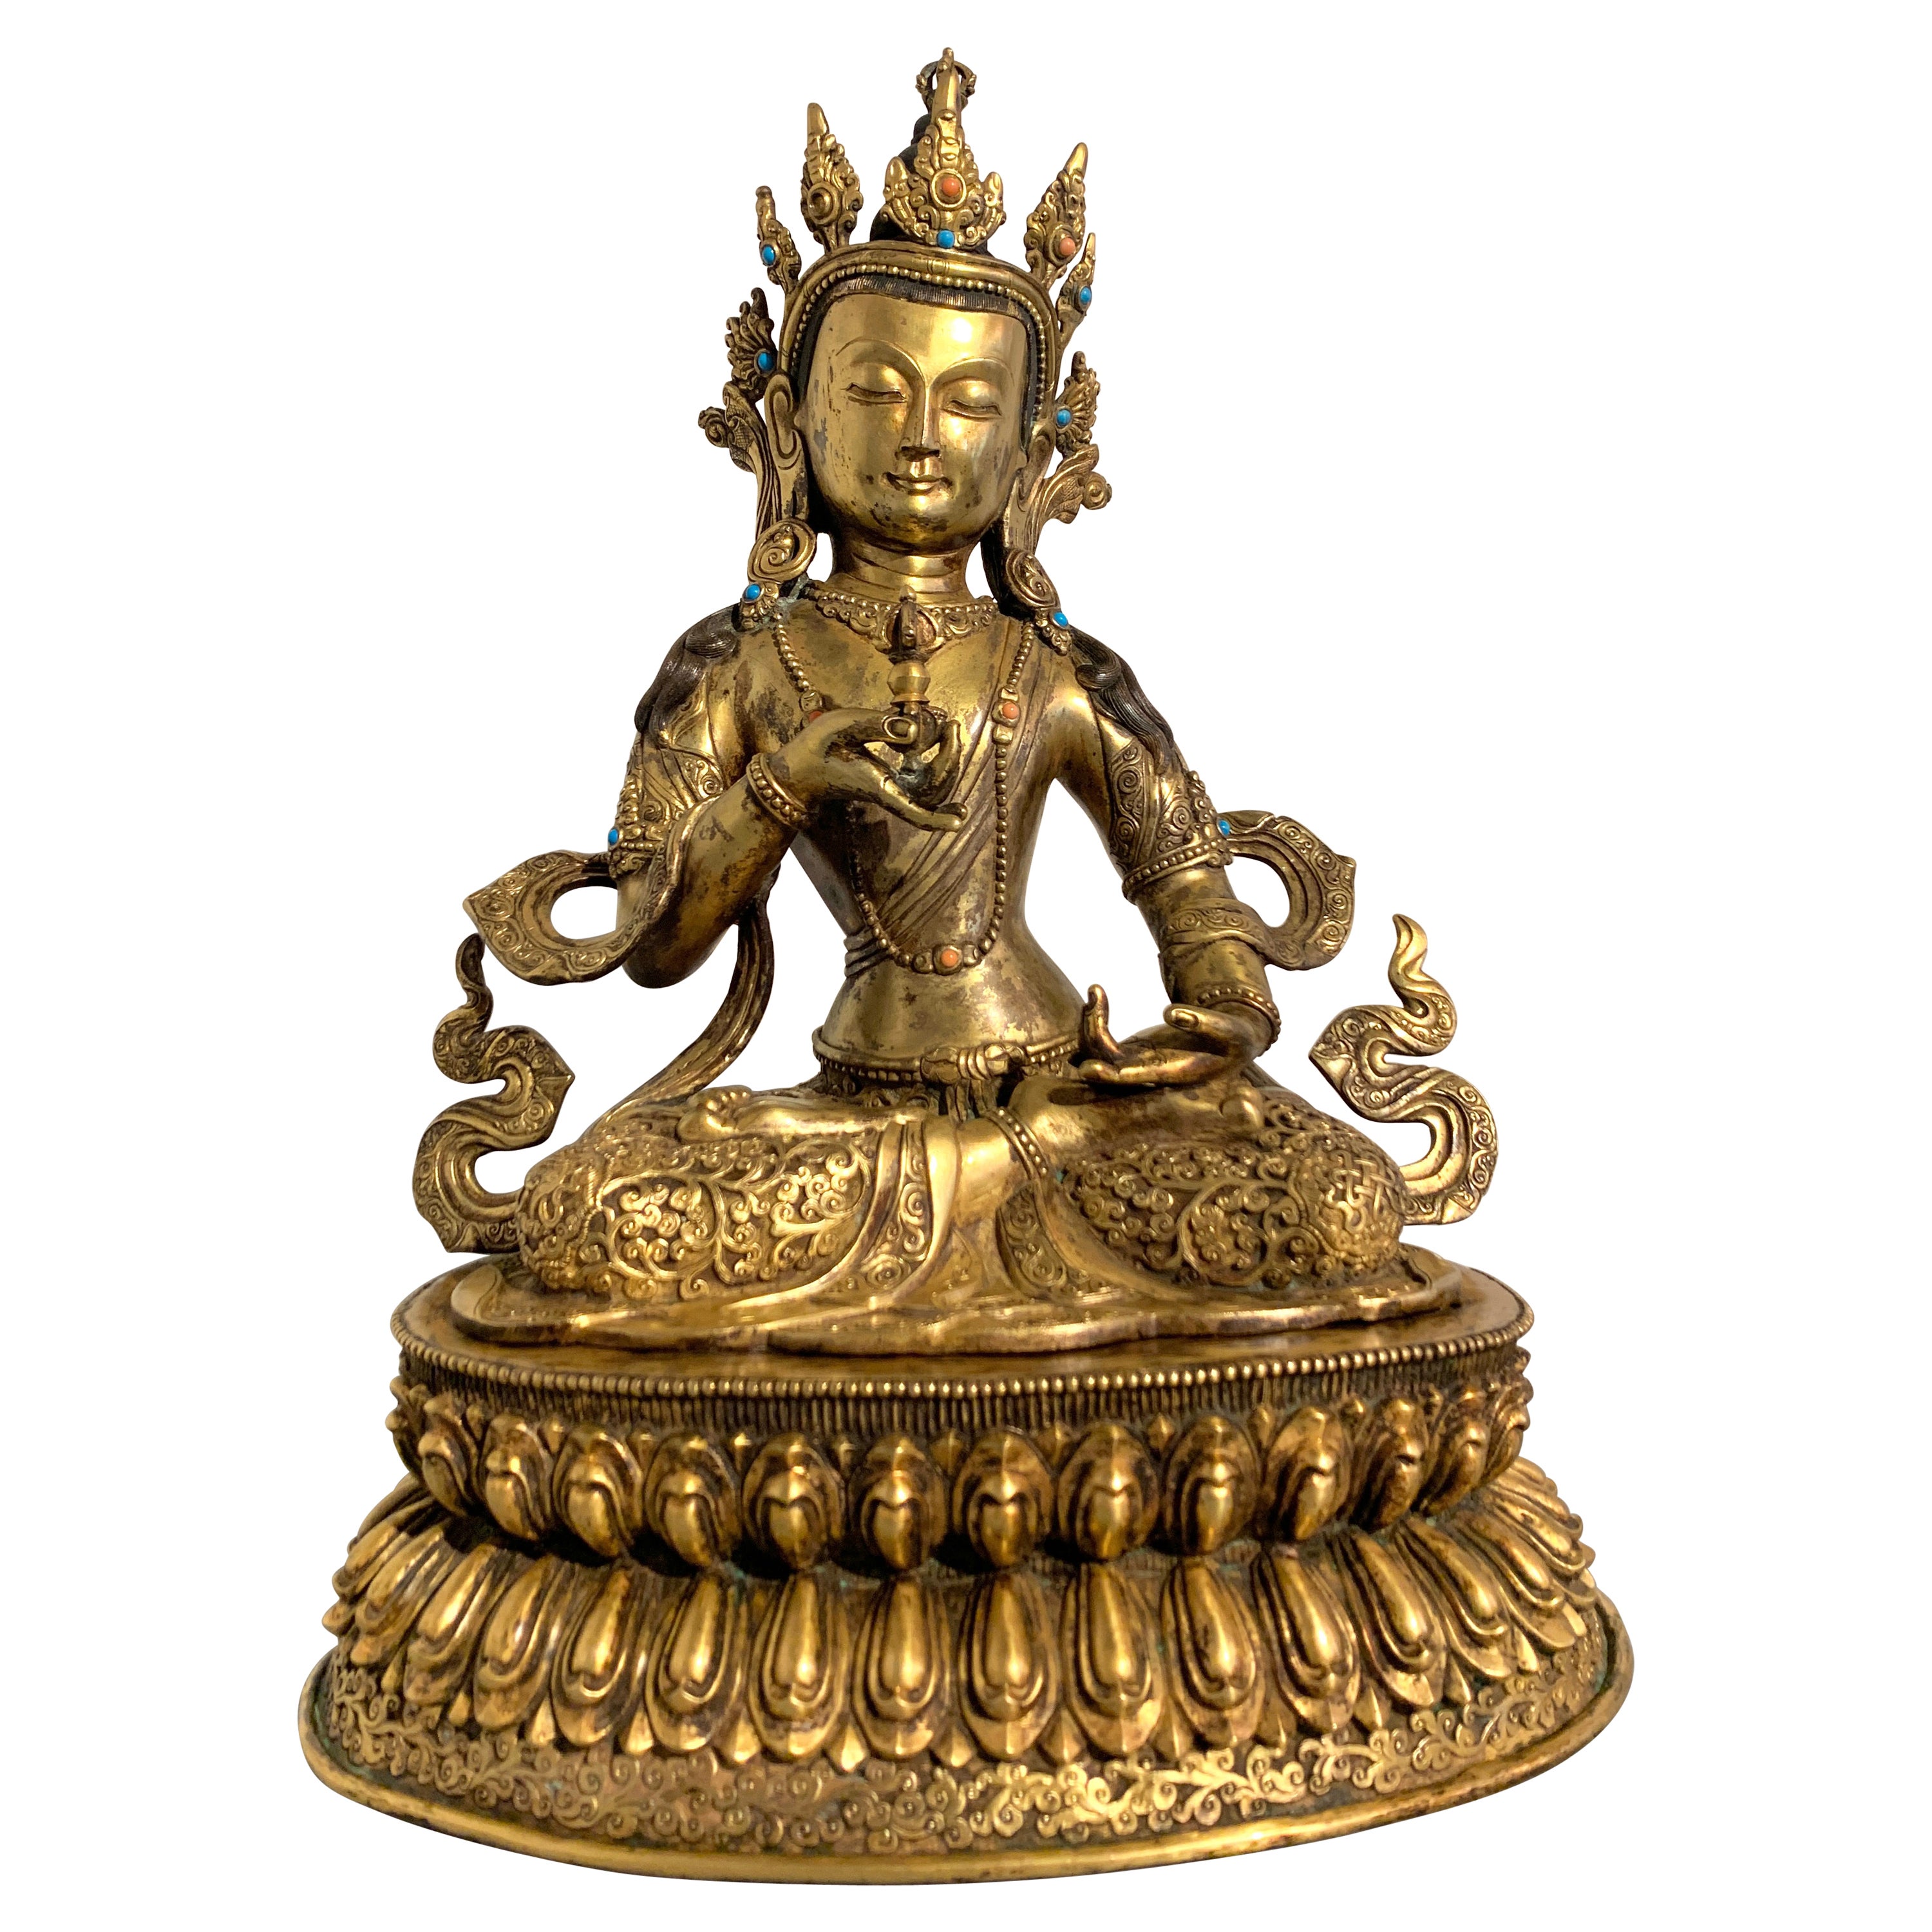 Grand Bouddha Vajrasattva népalais vintage en bronze doré, milieu du XXe siècle